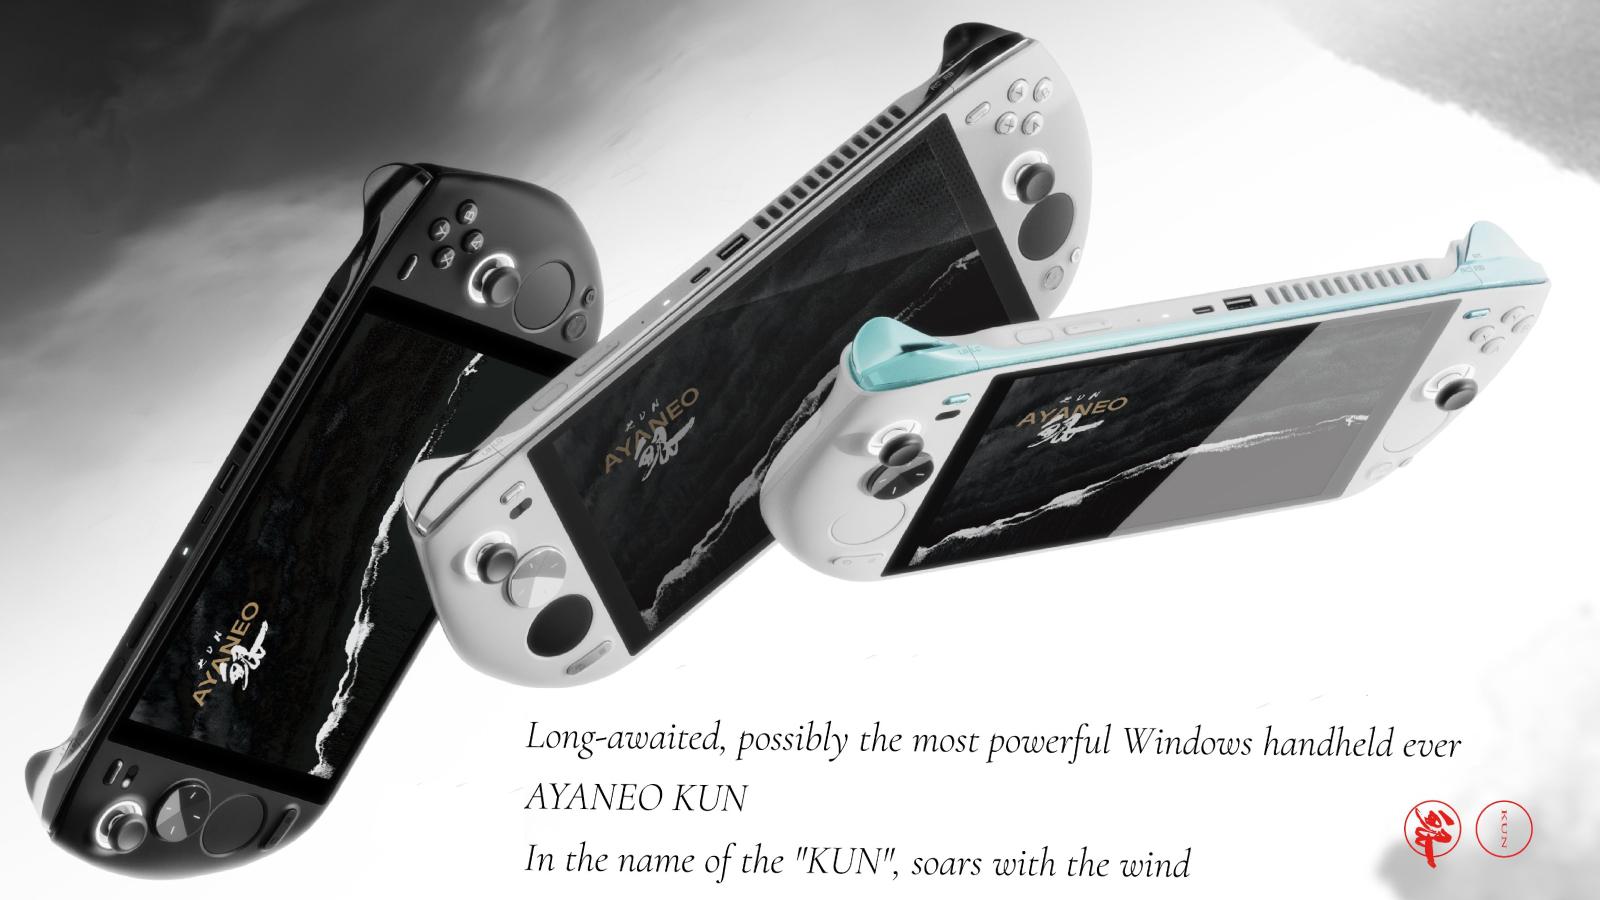 Ayaneo Kun header image featuring three consoles